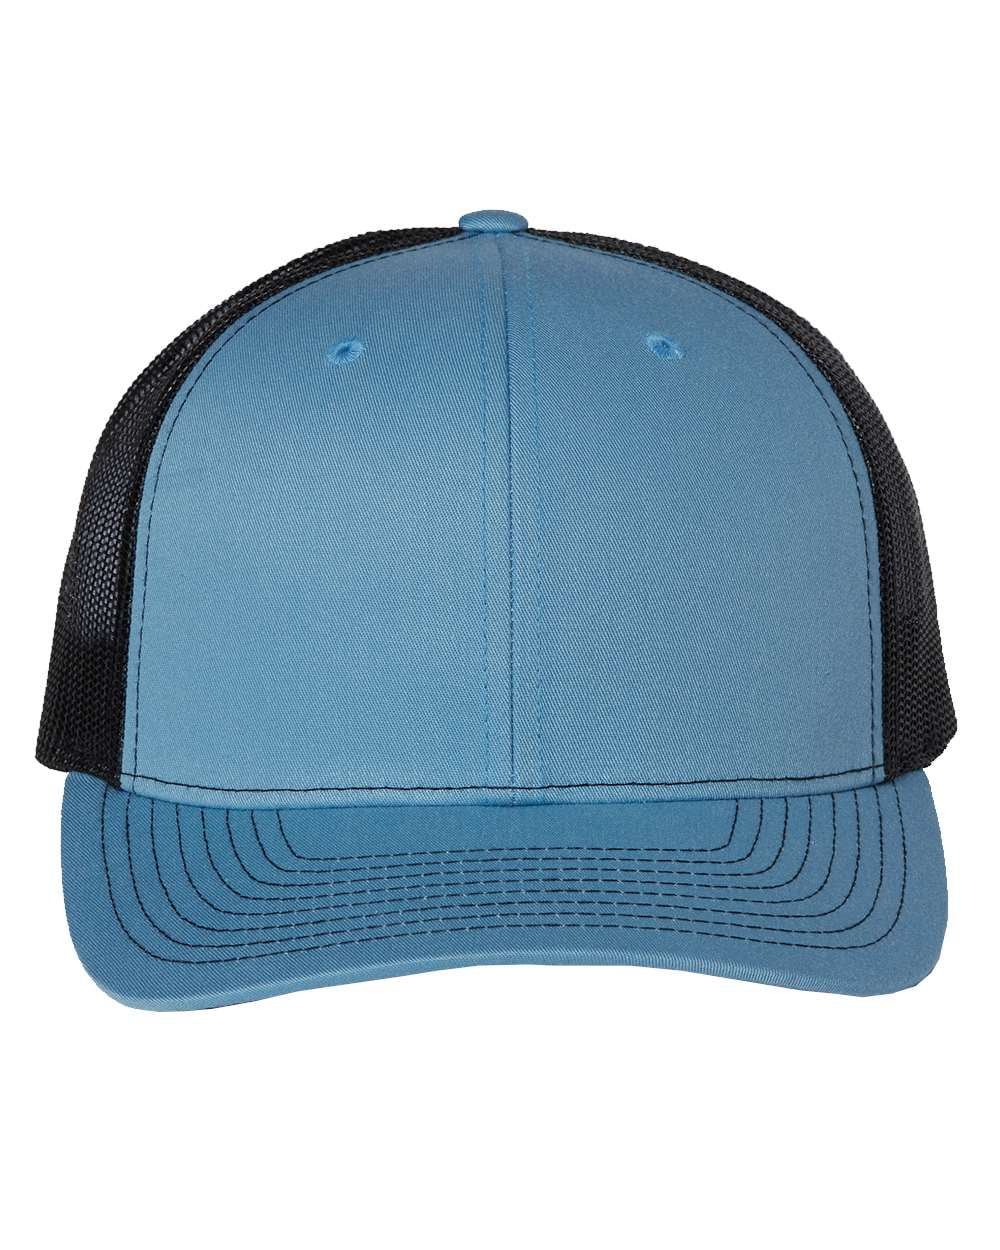 NEW NAVY BLUE CAP HAT 6 PANEL MESH MID PROFILE TRUCKER SNAPBACK STRUCTURED